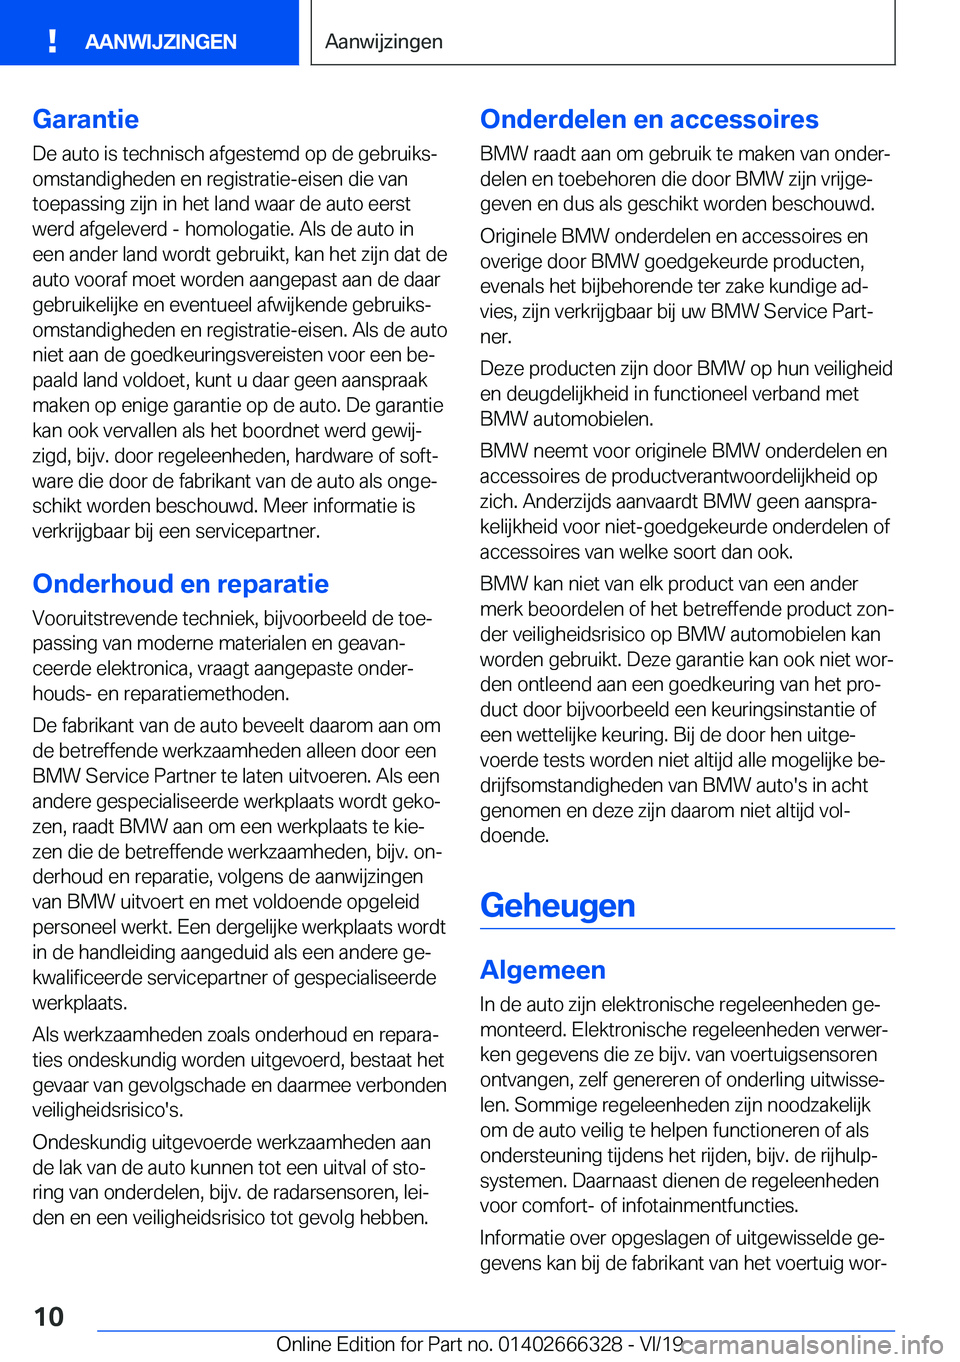 BMW 4 SERIES COUPE 2020  Instructieboekjes (in Dutch) �G�a�r�a�n�t�i�e�D�e��a�u�t�o��i�s��t�e�c�h�n�i�s�c�h��a�f�g�e�s�t�e�m�d��o�p��d�e��g�e�b�r�u�i�k�sj
�o�m�s�t�a�n�d�i�g�h�e�d�e�n��e�n��r�e�g�i�s�t�r�a�t�i�e�-�e�i�s�e�n��d�i�e��v�a�n �t�o